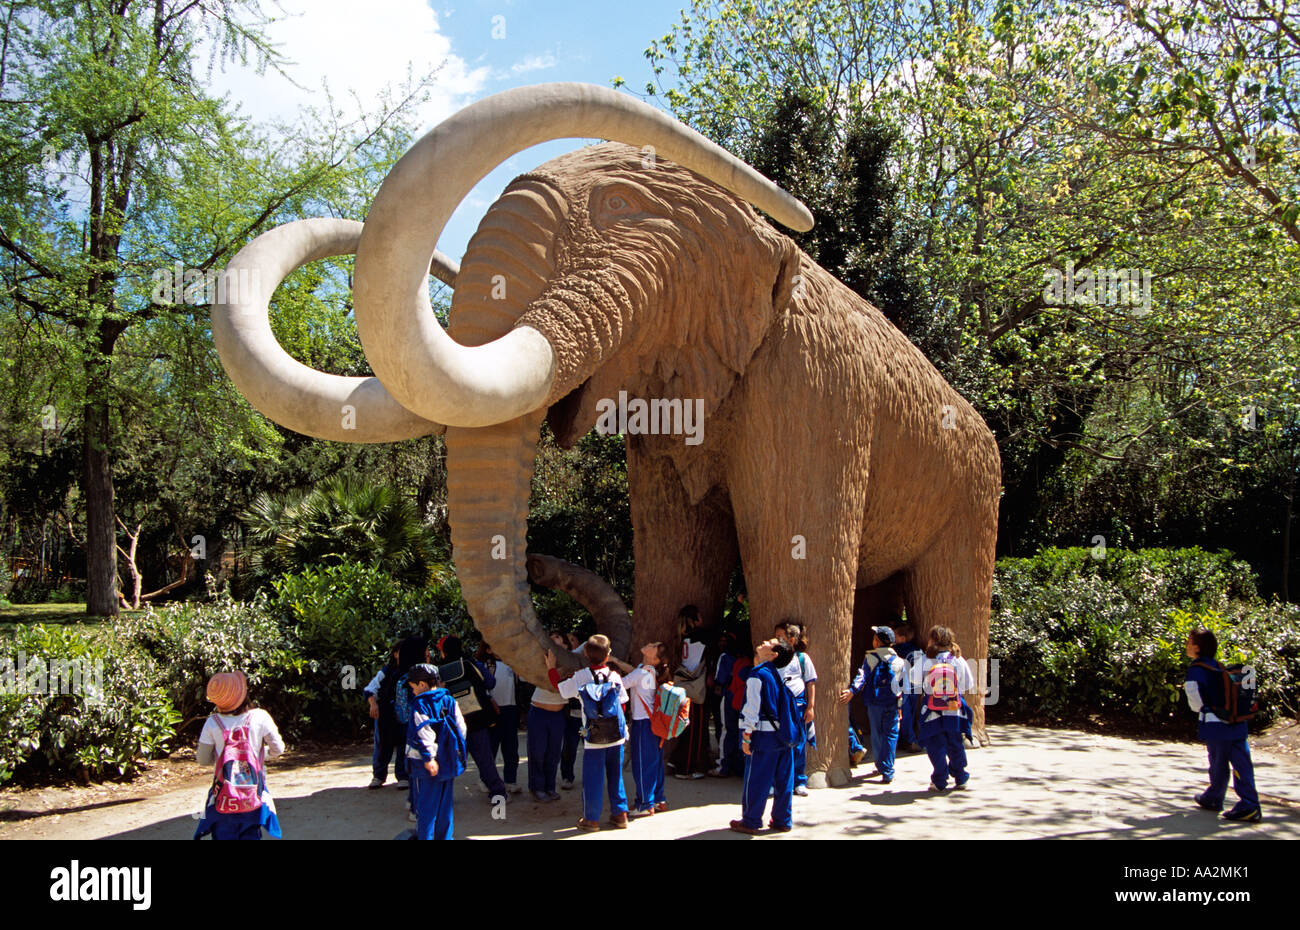 Mamut, Mammuthus Primigenius, and school children, Parc de la Ciutadella, Barcelona, Spain Stock Photo